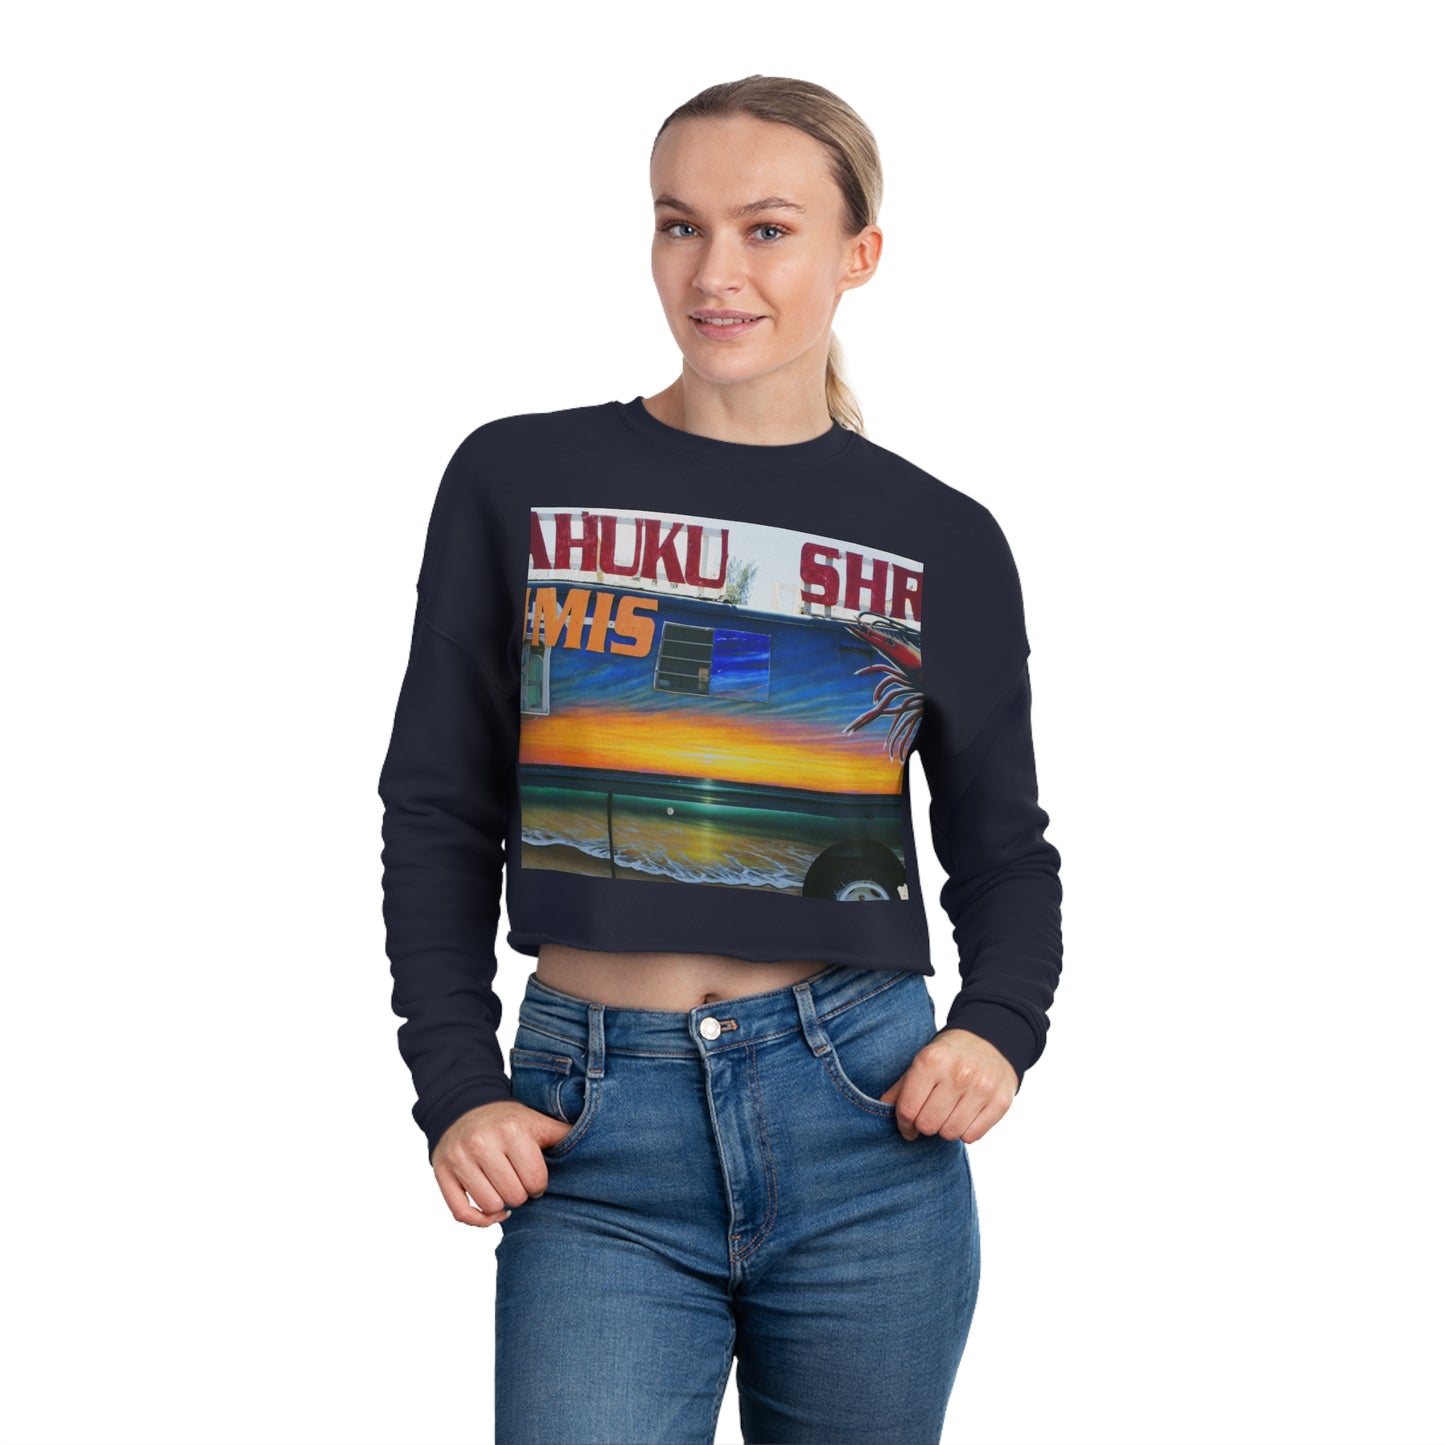 Fumis Aloha - Women's Cropped Sweatshirt - Fry1Productions